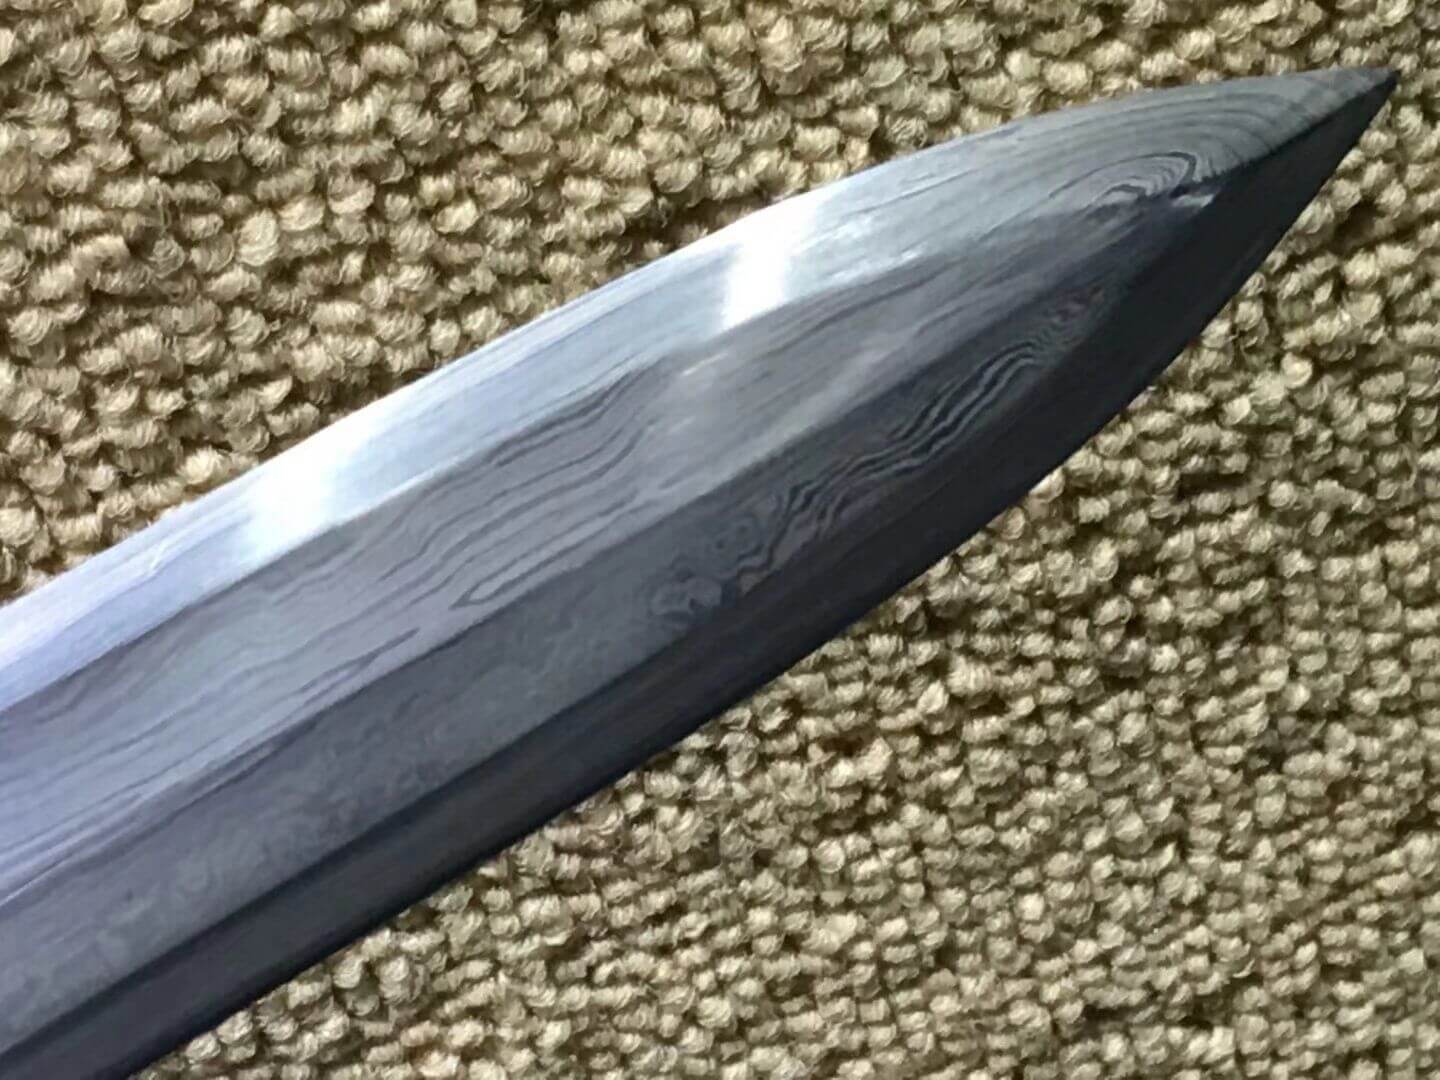 Han sword,Folded steel blade,Black wood scabbard,Alloy fitting - Chinese sword shop